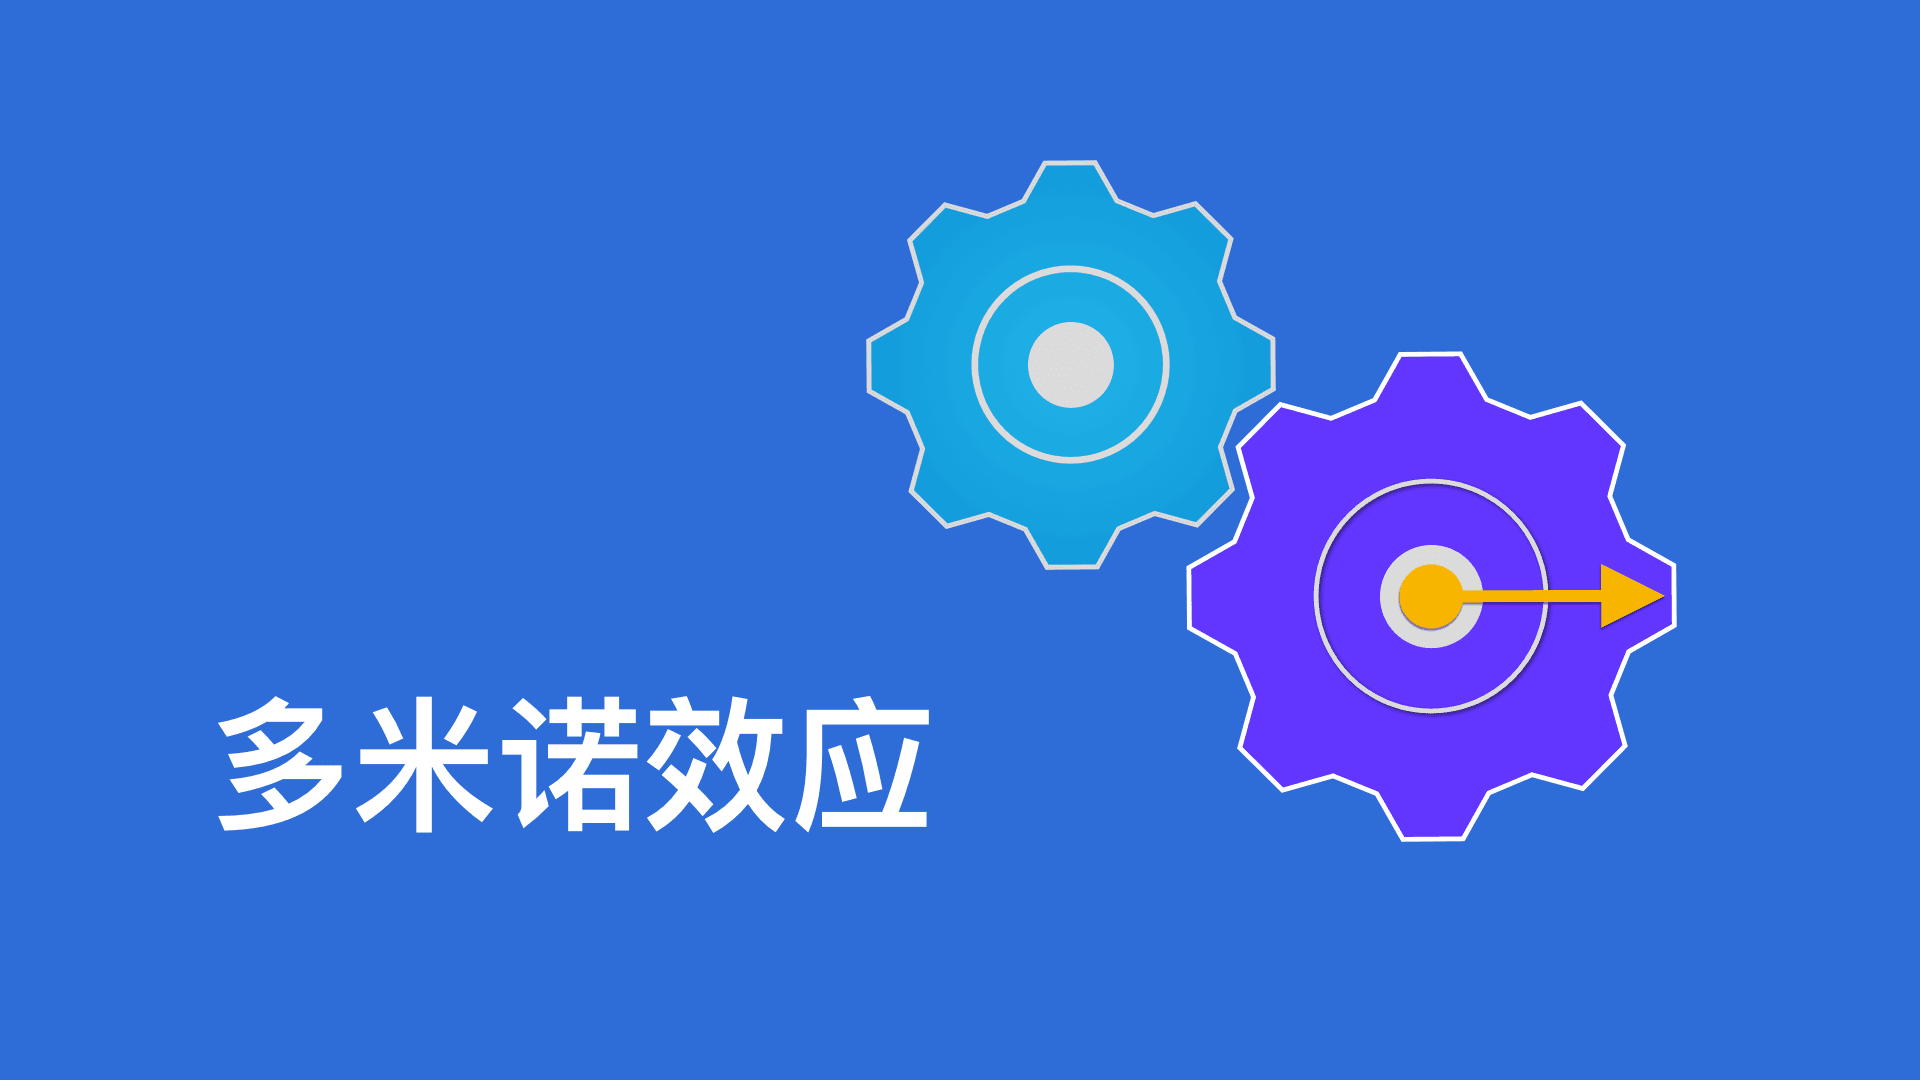 Banner of 도미노 기어 1.0.1